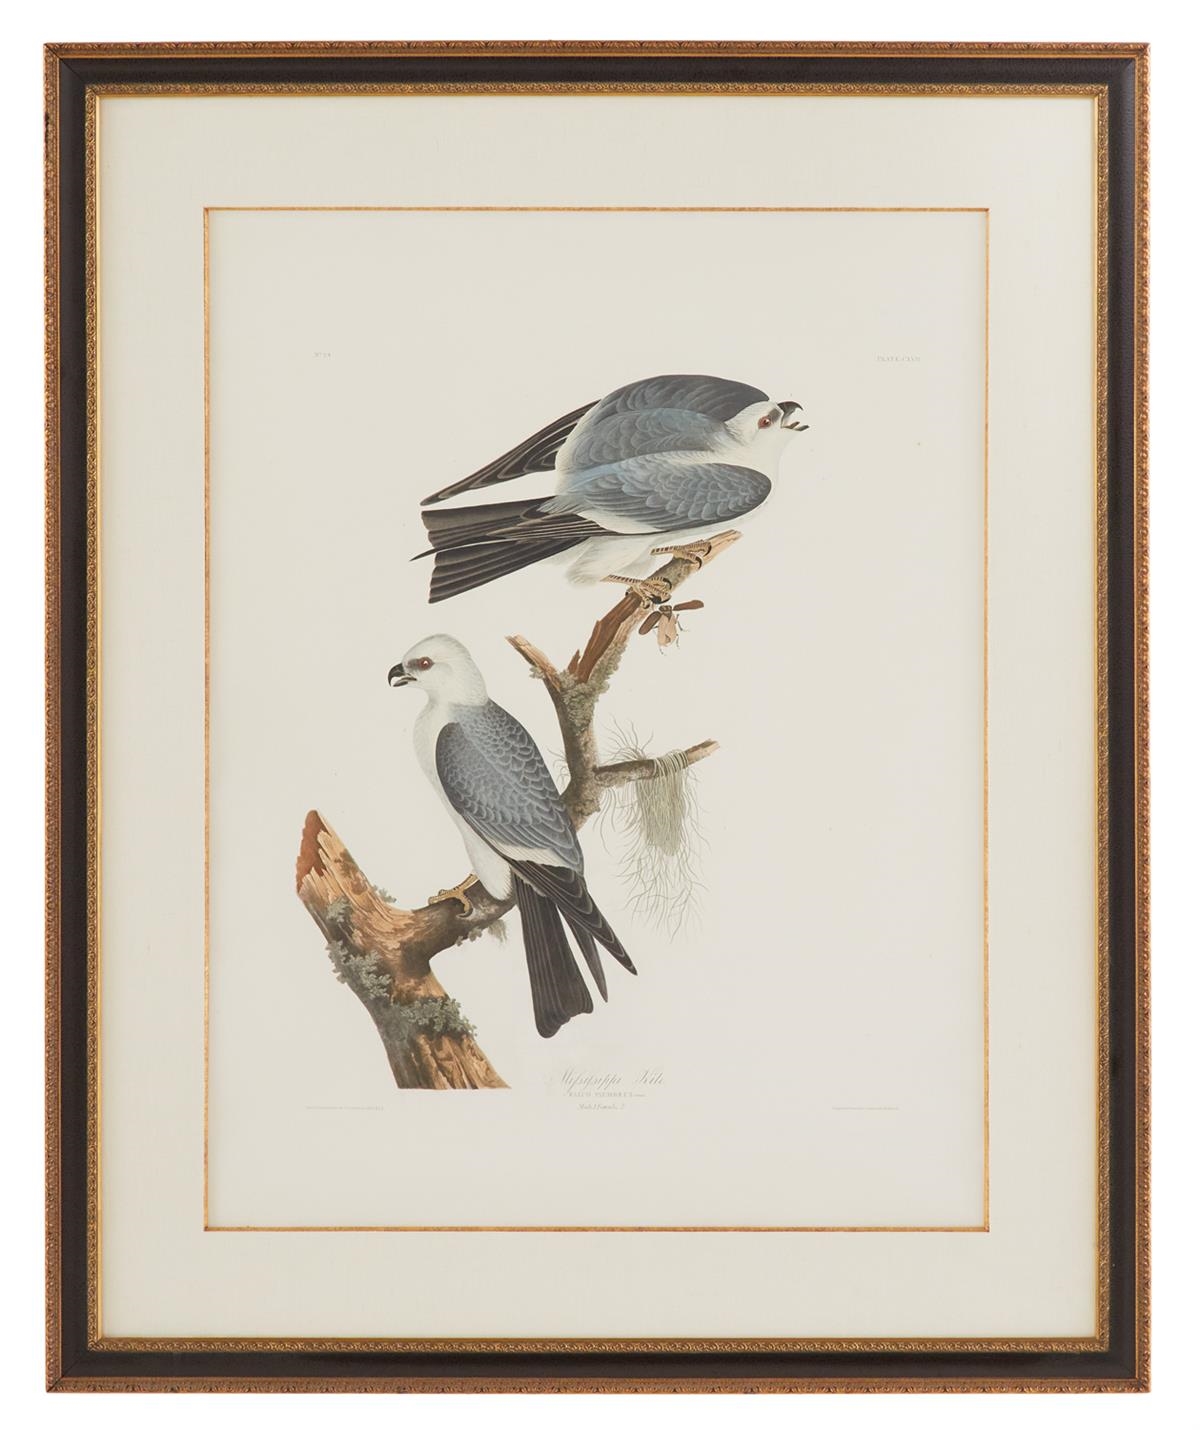 "Mississippi Kite, Male 1, Female 2, No. 24, Plate CXII (117)" by John James Audubon, Robert Havell, 1831